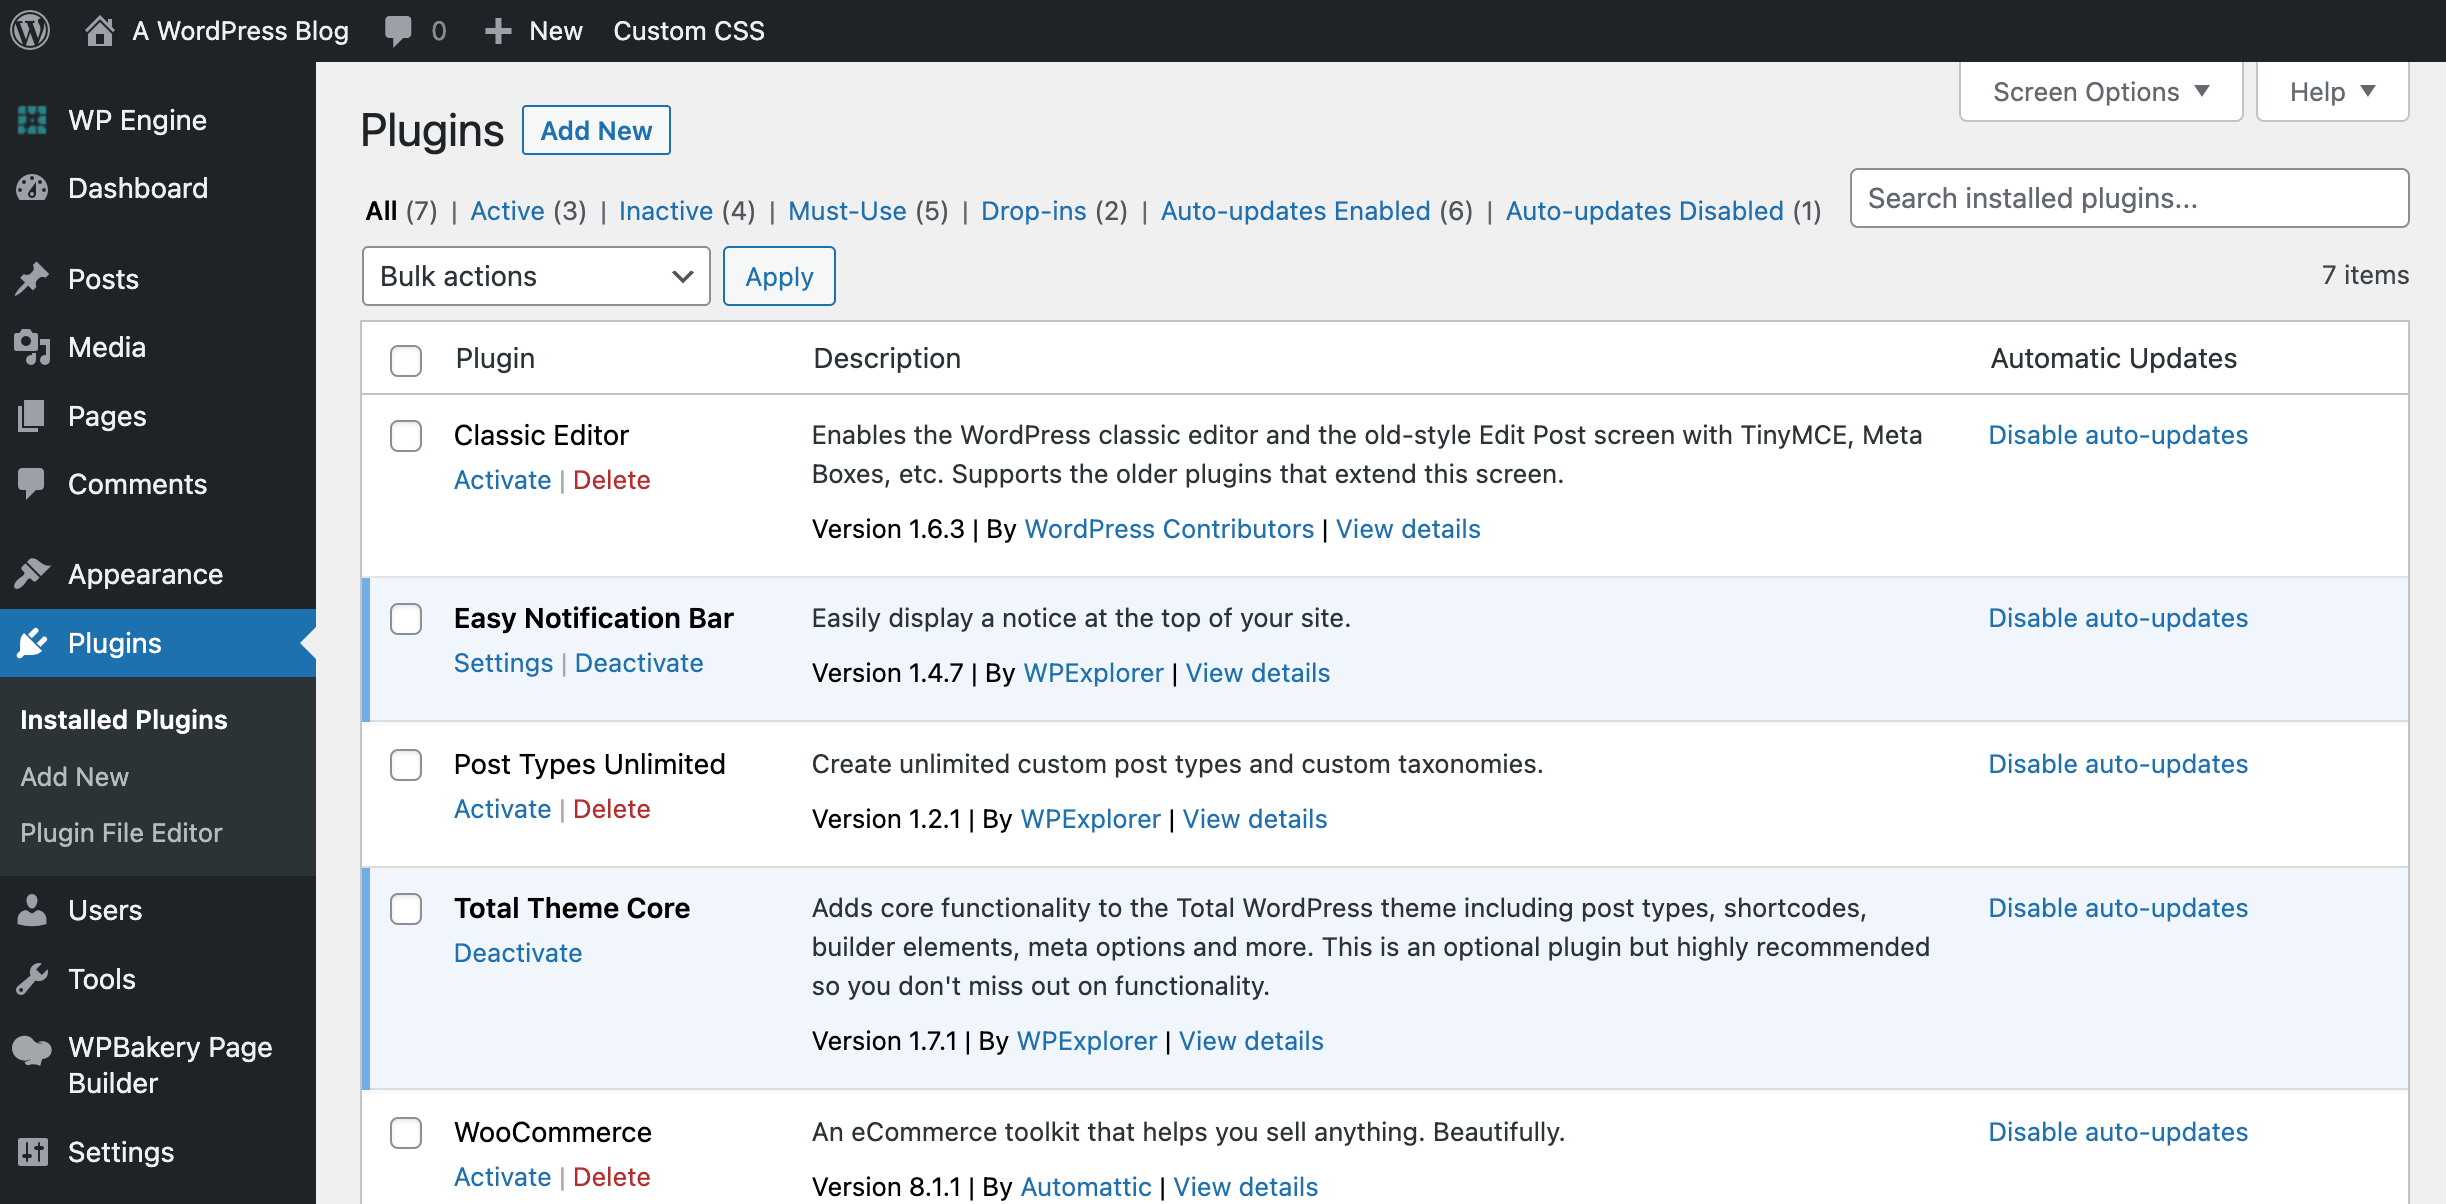 WordPress Dashboard: Plugins